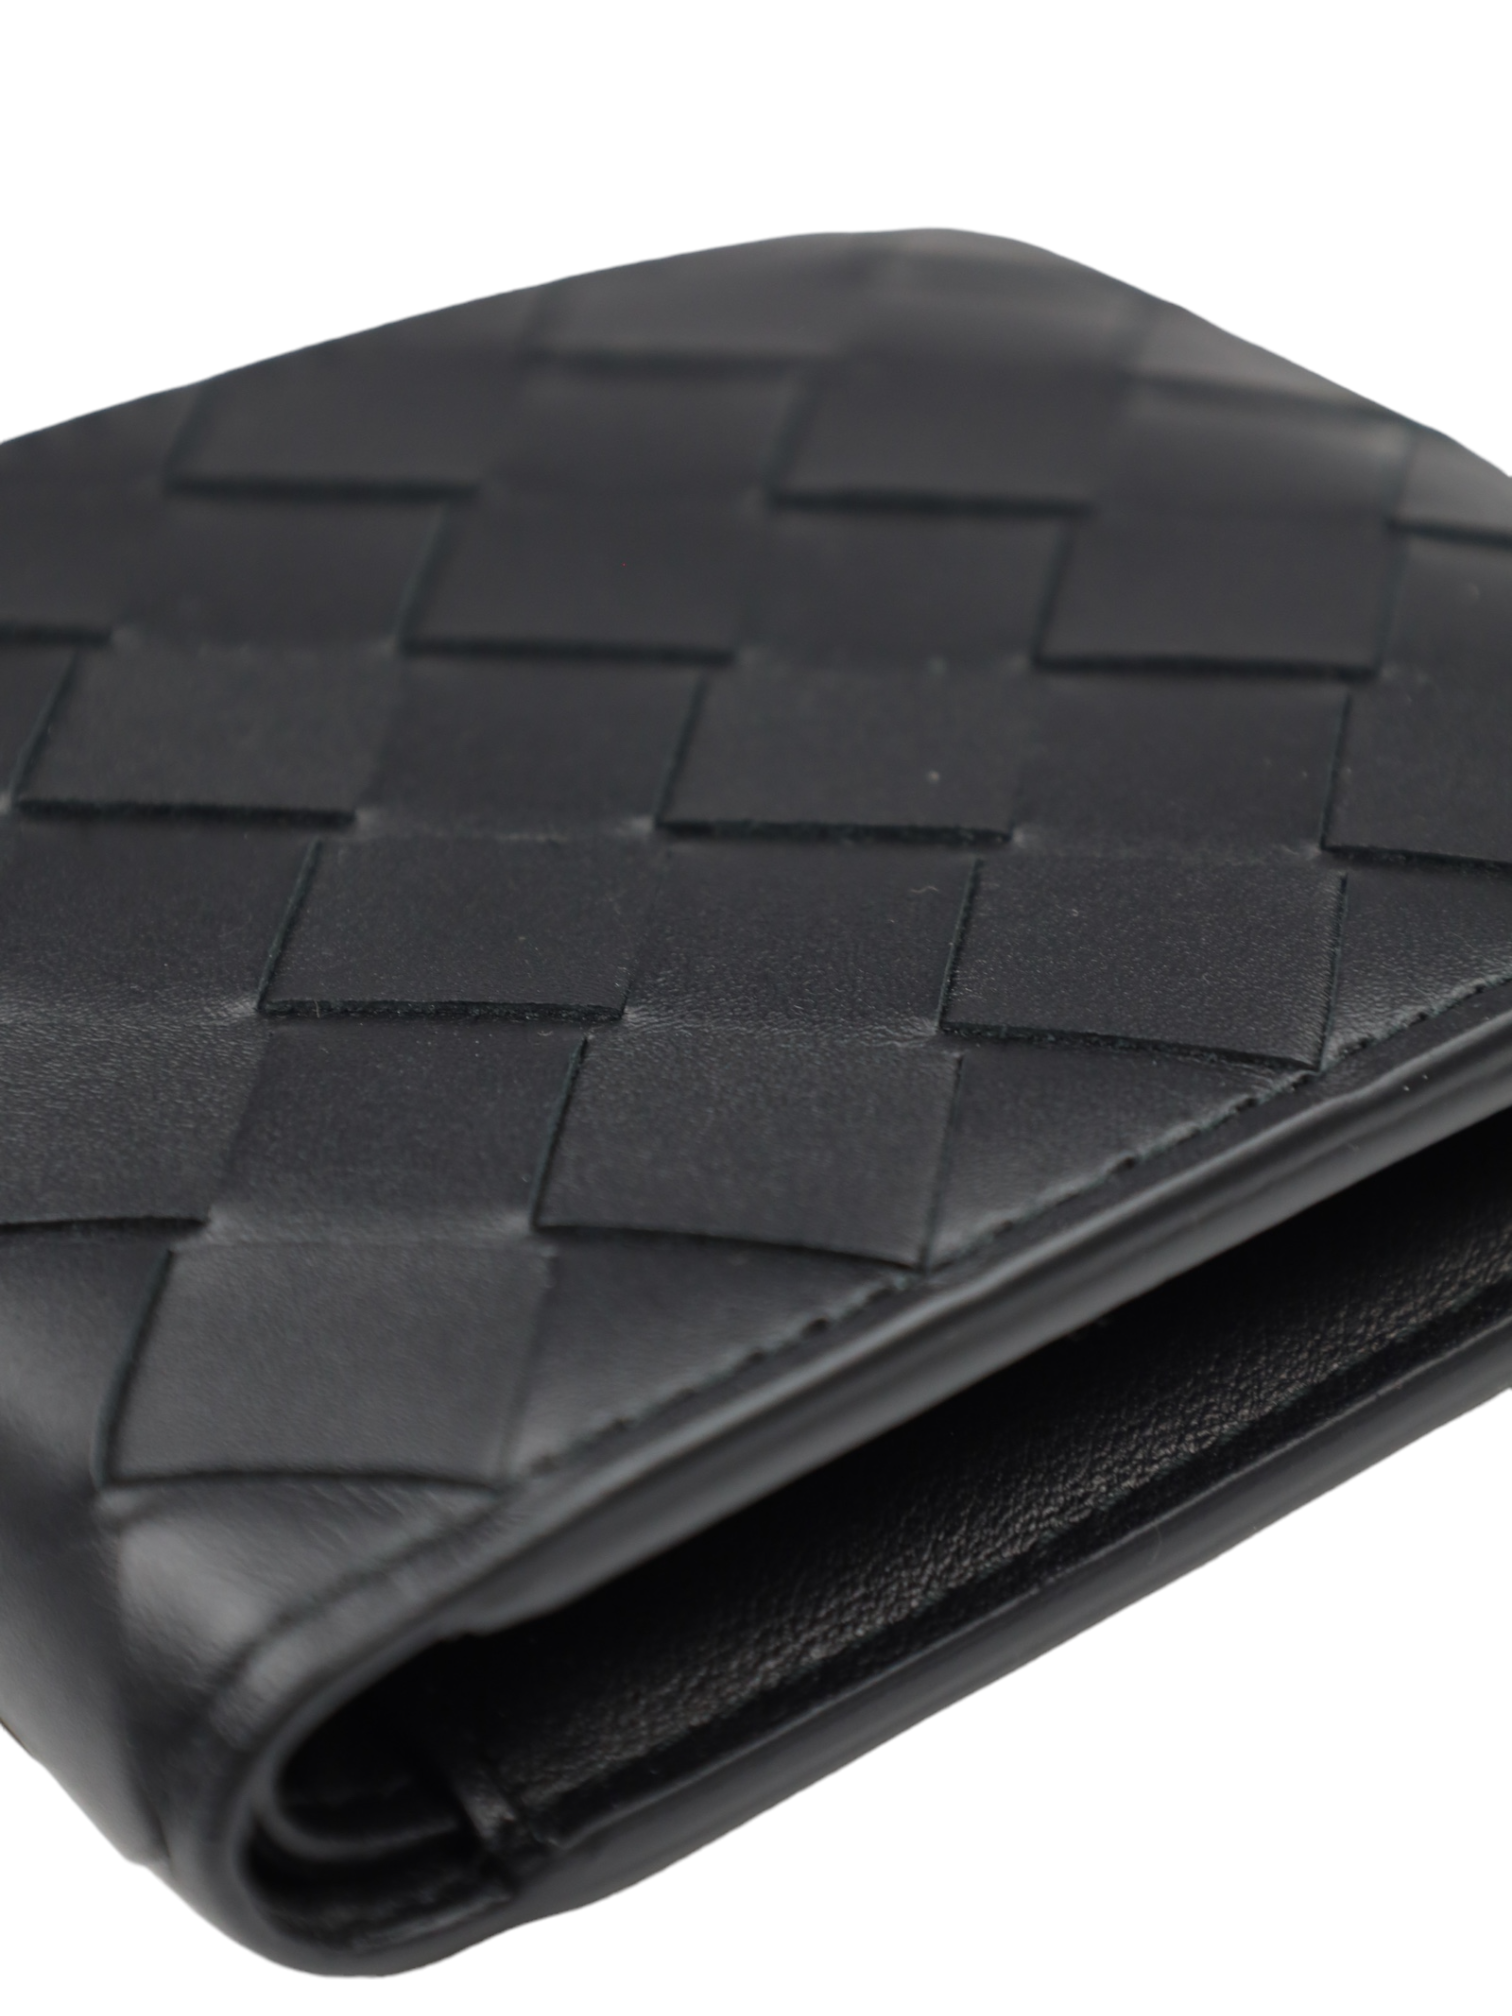 Bottega Veneta Black Intrecciato Leather Billfold Wallet